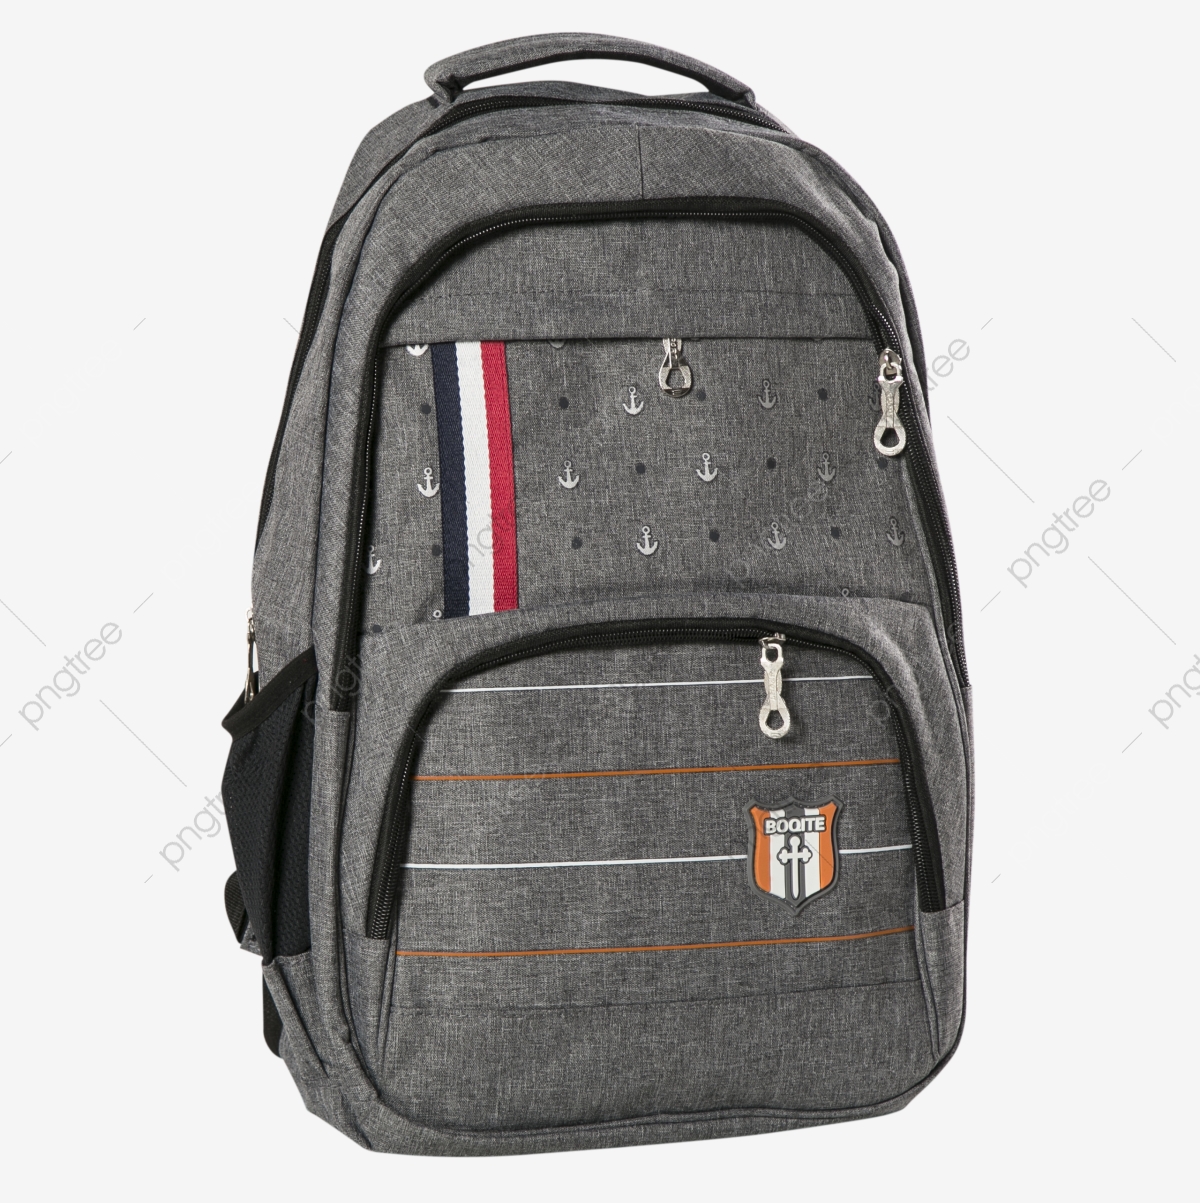 Clipart backpack 2 bag. School model png transparent